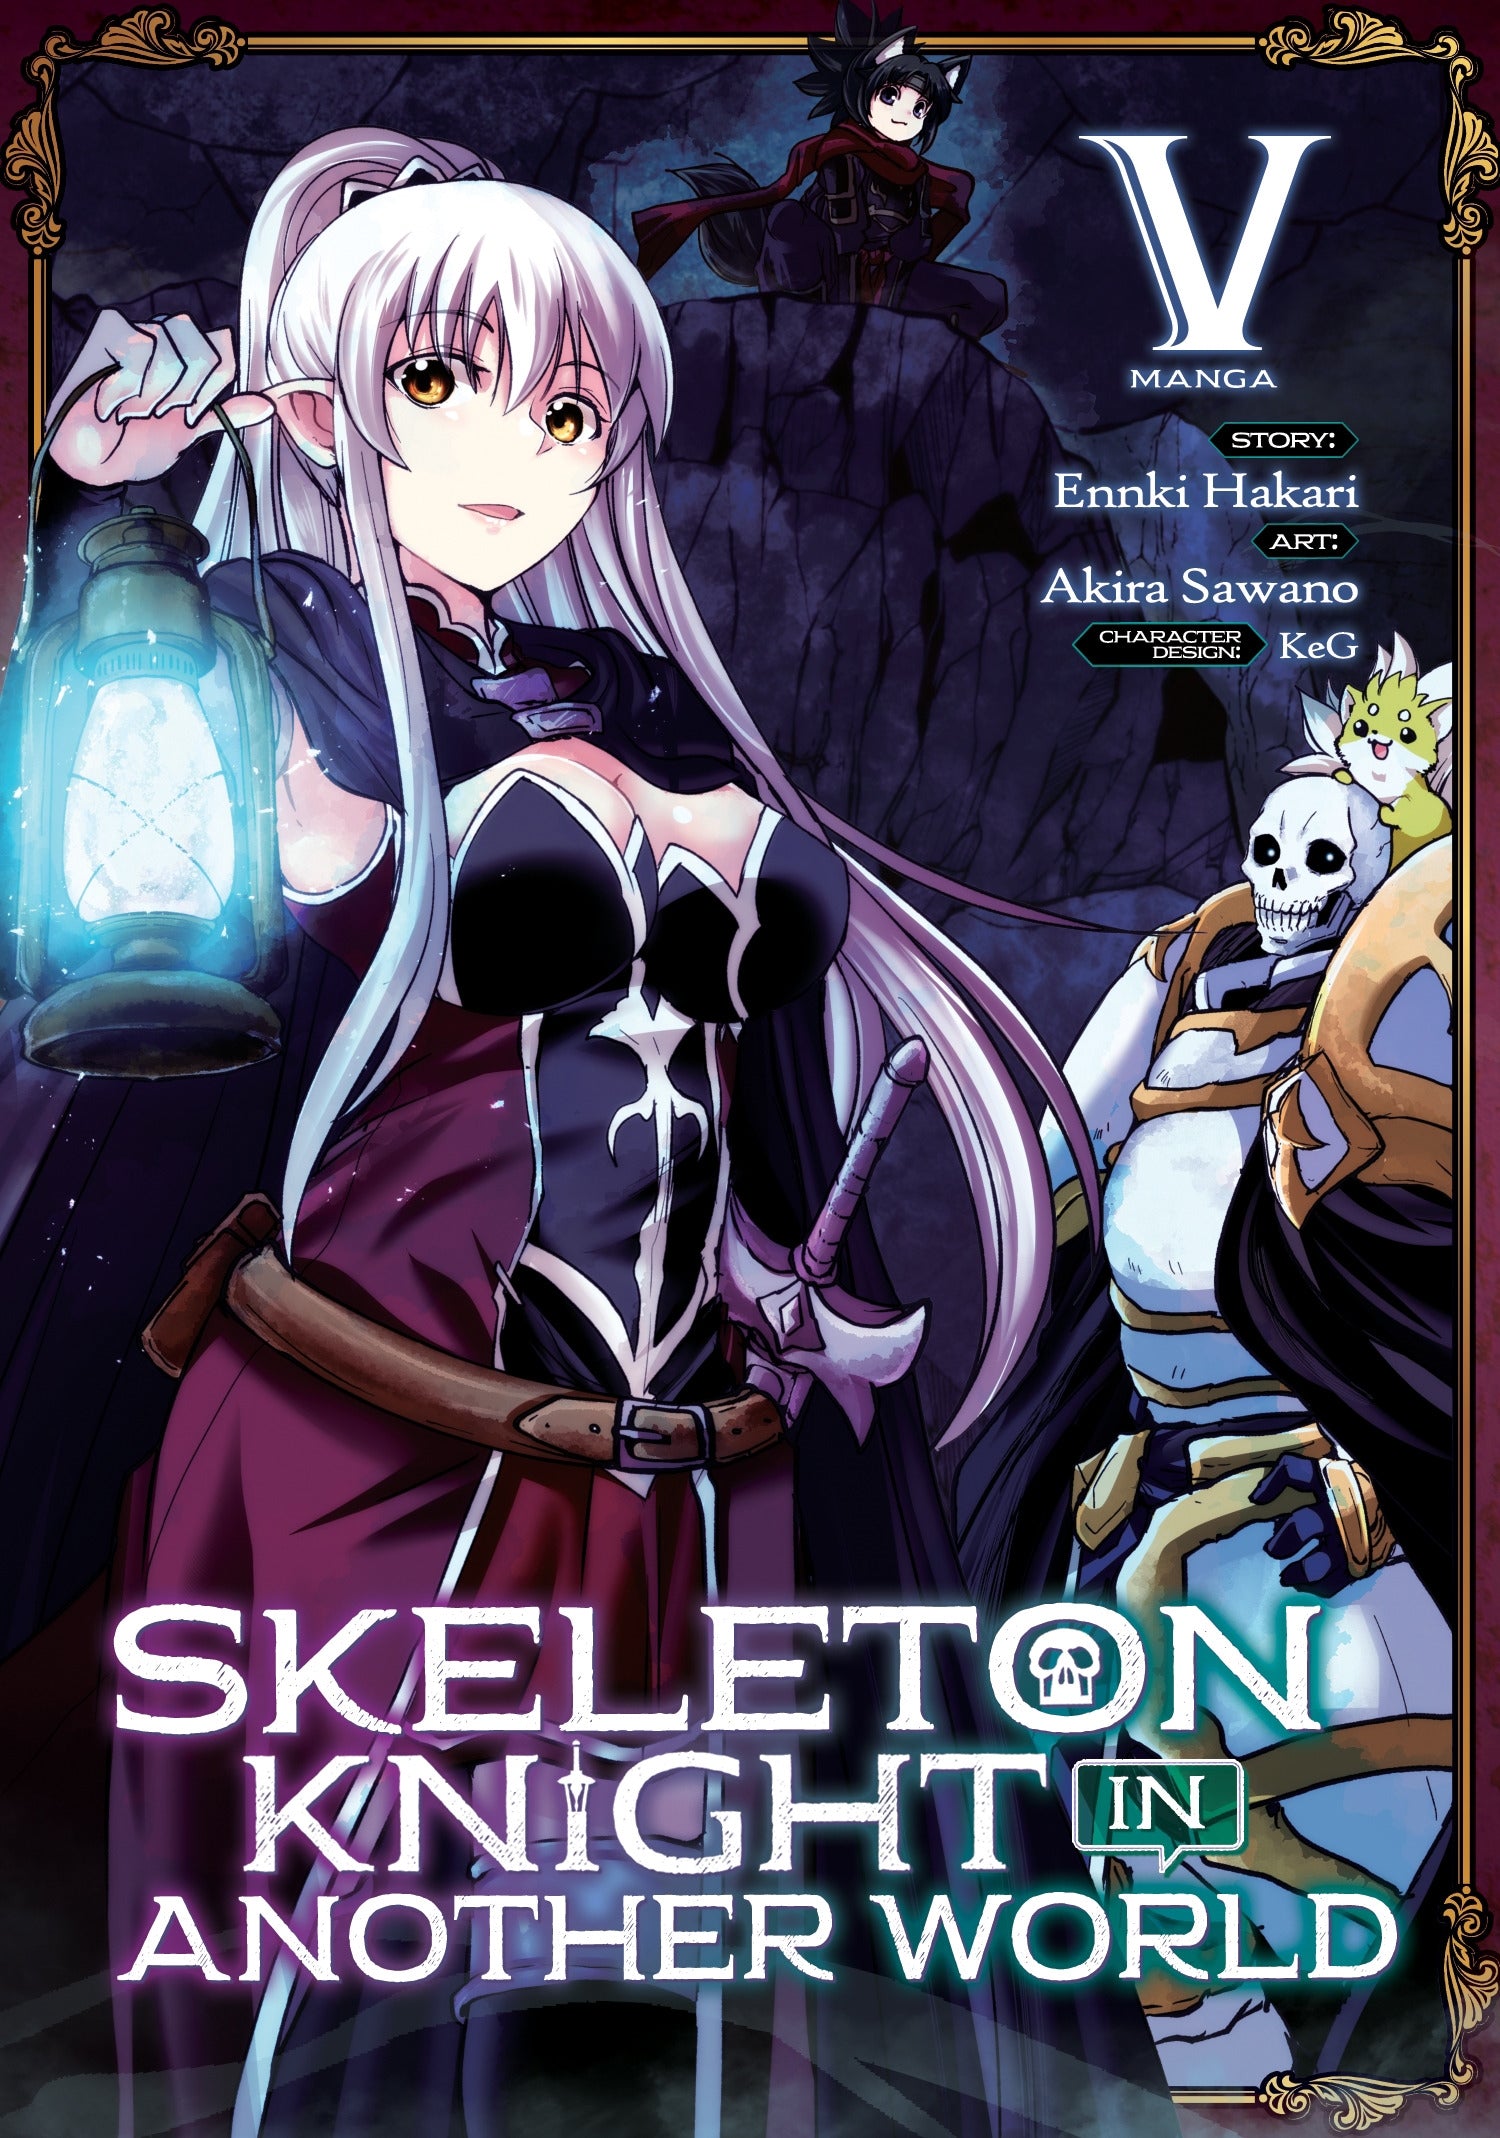 Skeleton Knight in Another World (Manga) Vol. 5 - Manga Warehouse